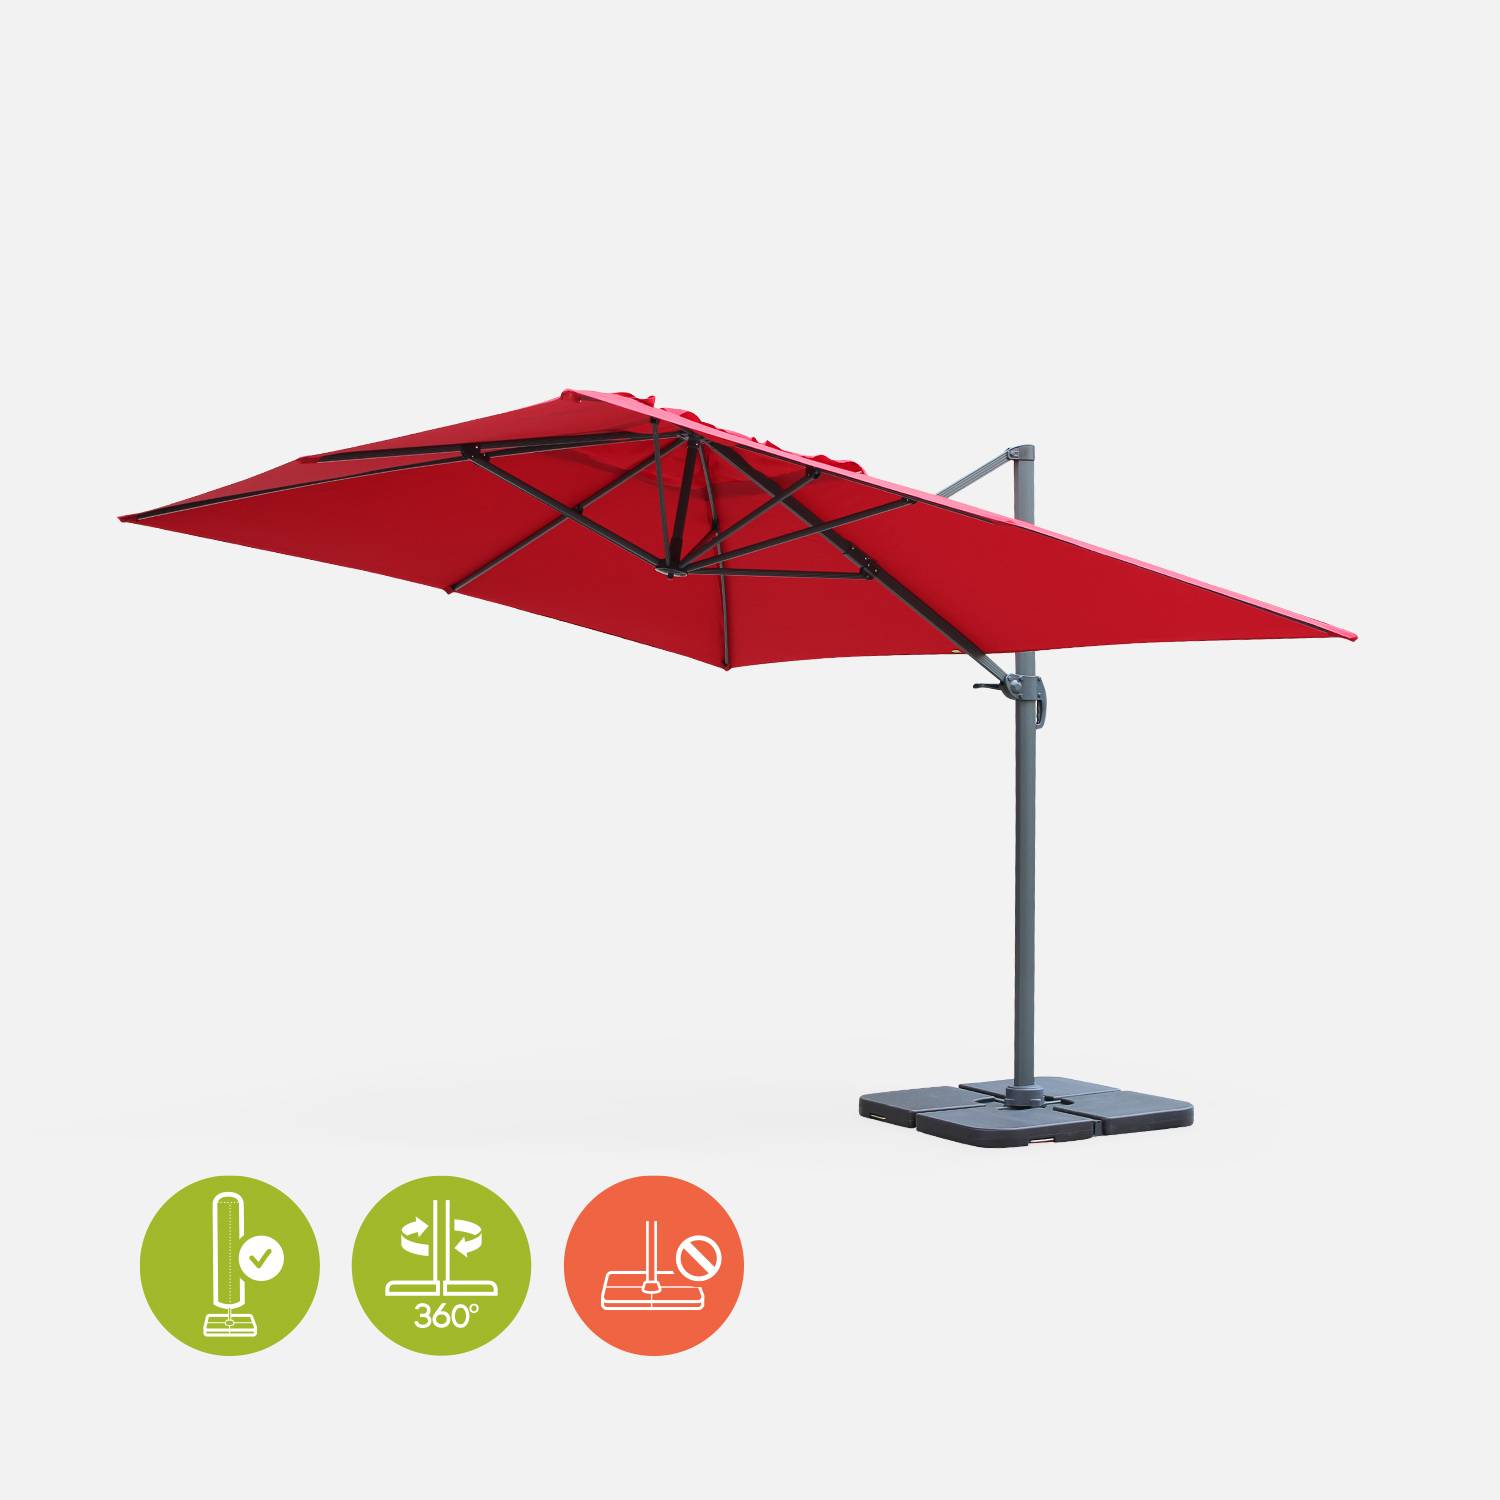 Rectangular cantilever parasol, 3x4m - Saint Jean de Luz - Red,sweeek,Photo3